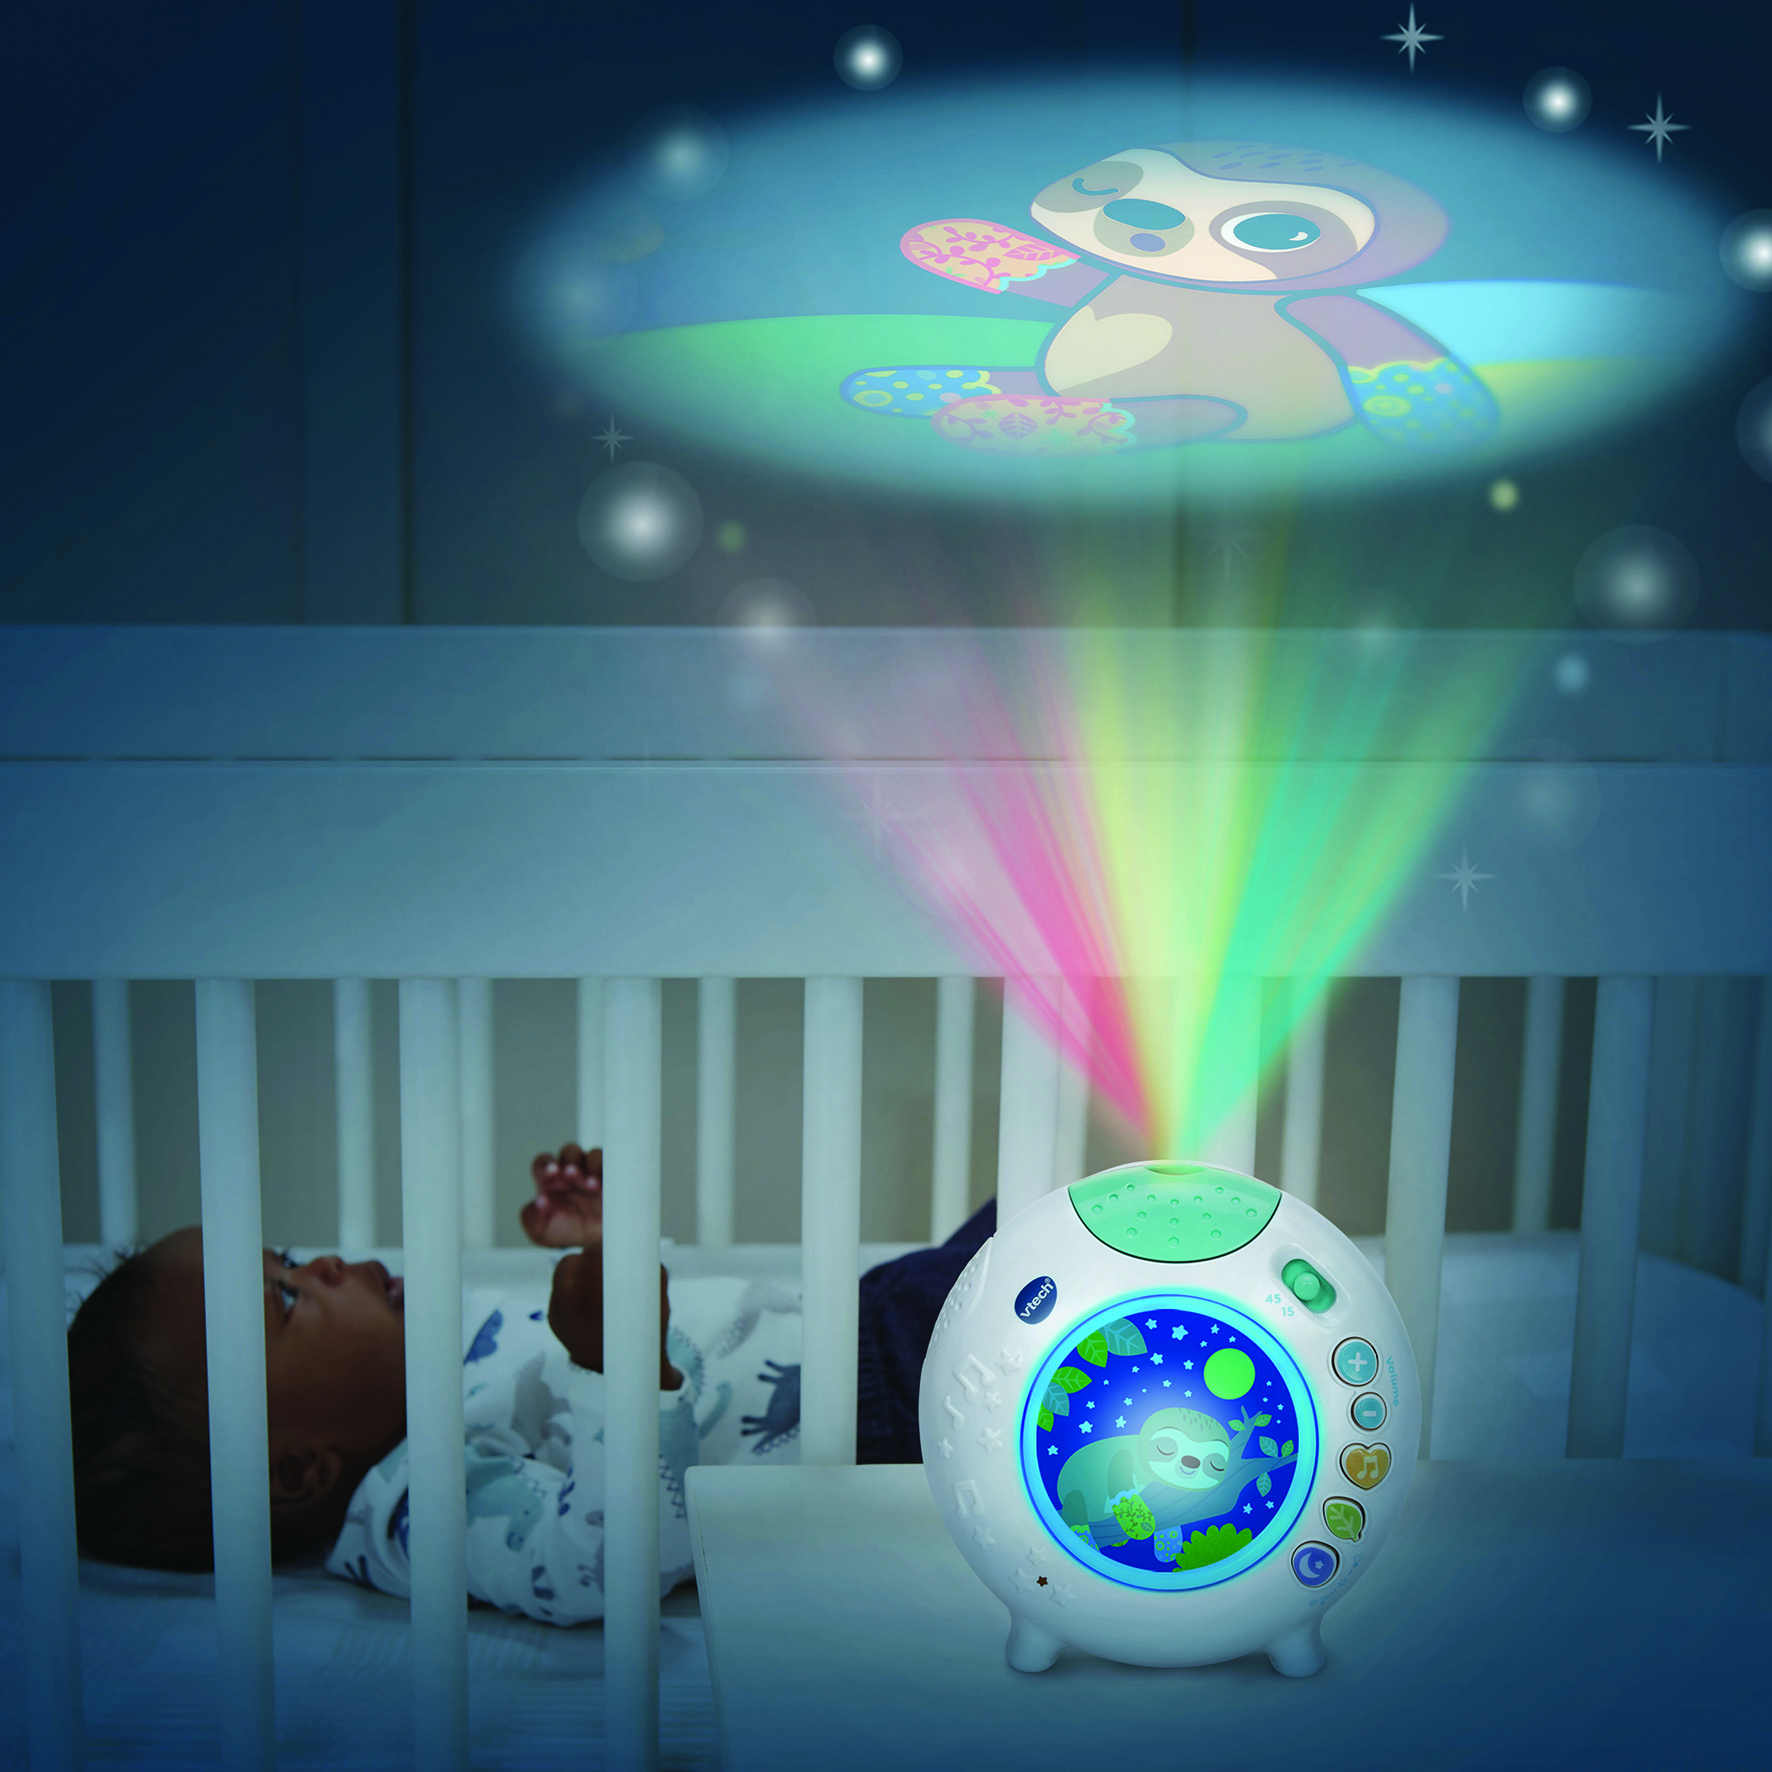 VTech Baby - Veilleuse bébé - Lumi veilleuse nuit enchantée bleue